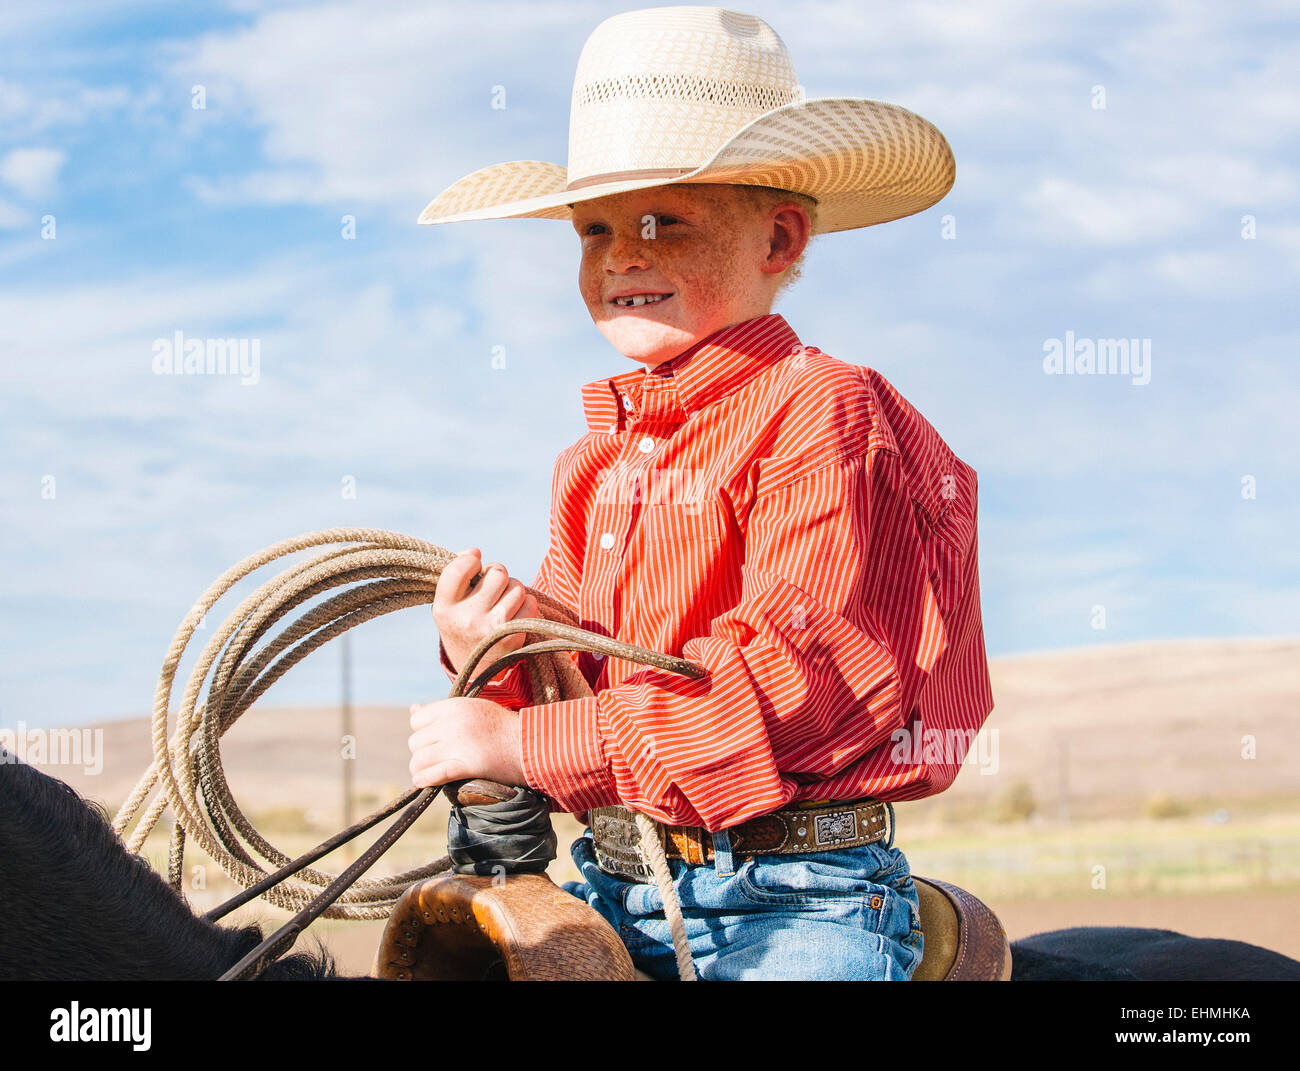 Caucasian boy on horse carrying lasso Stock Photo